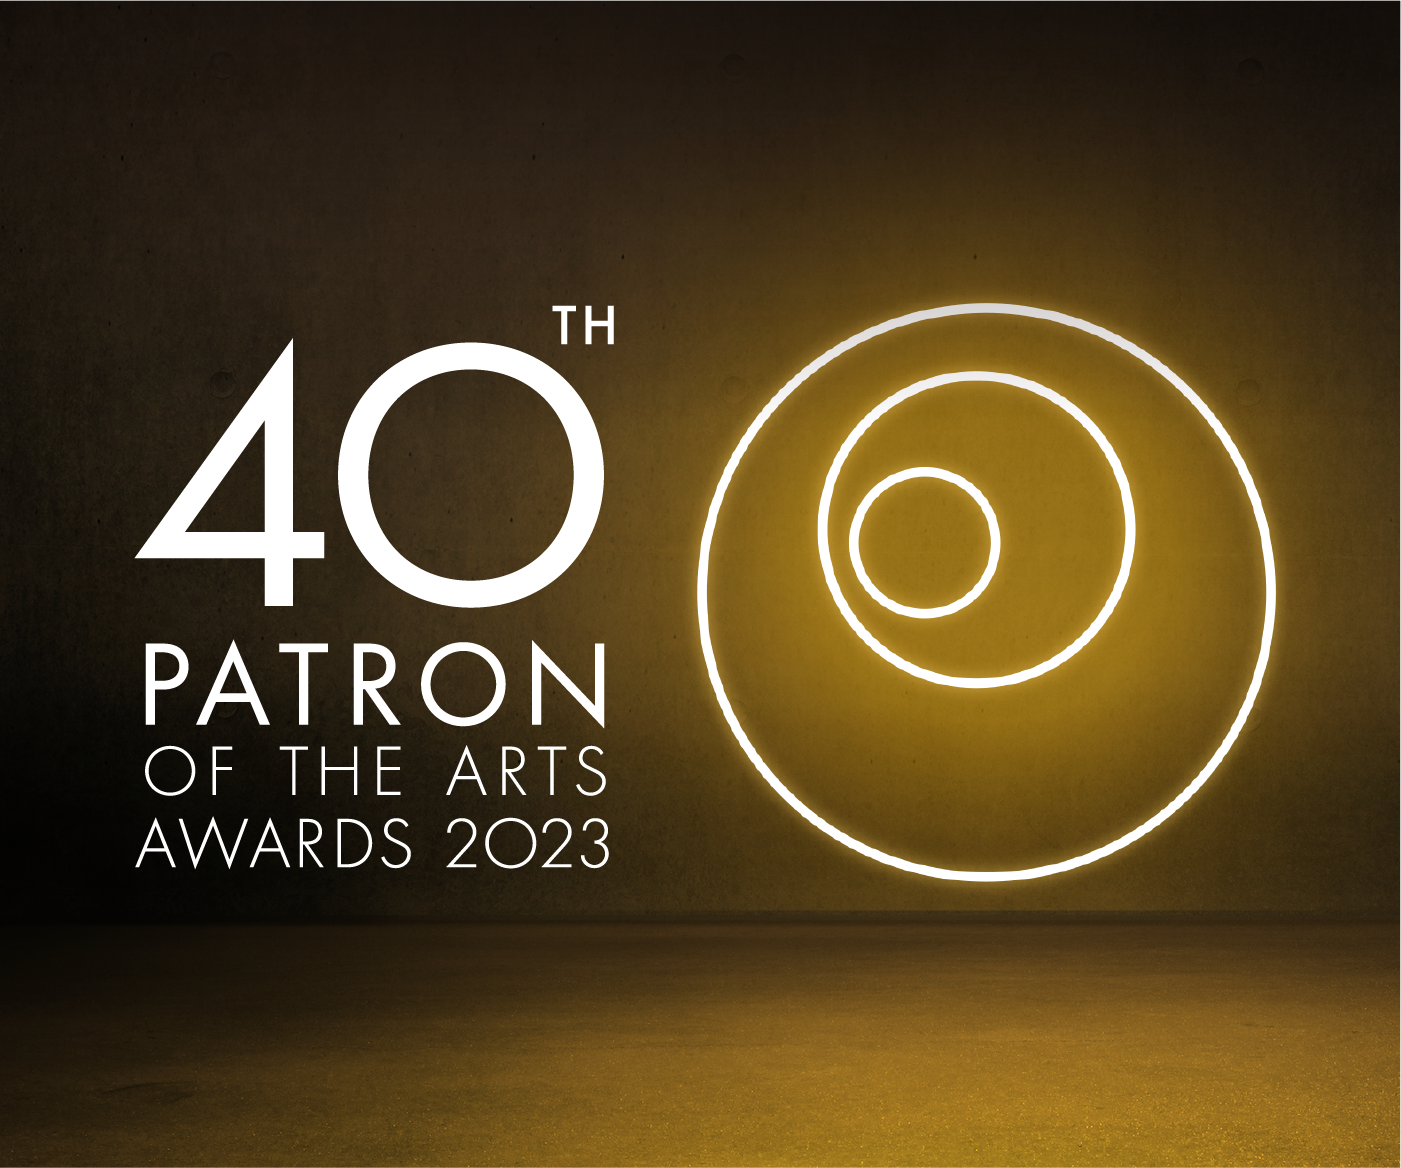 Key Visual of the 40th Patron of the Arts Awards 